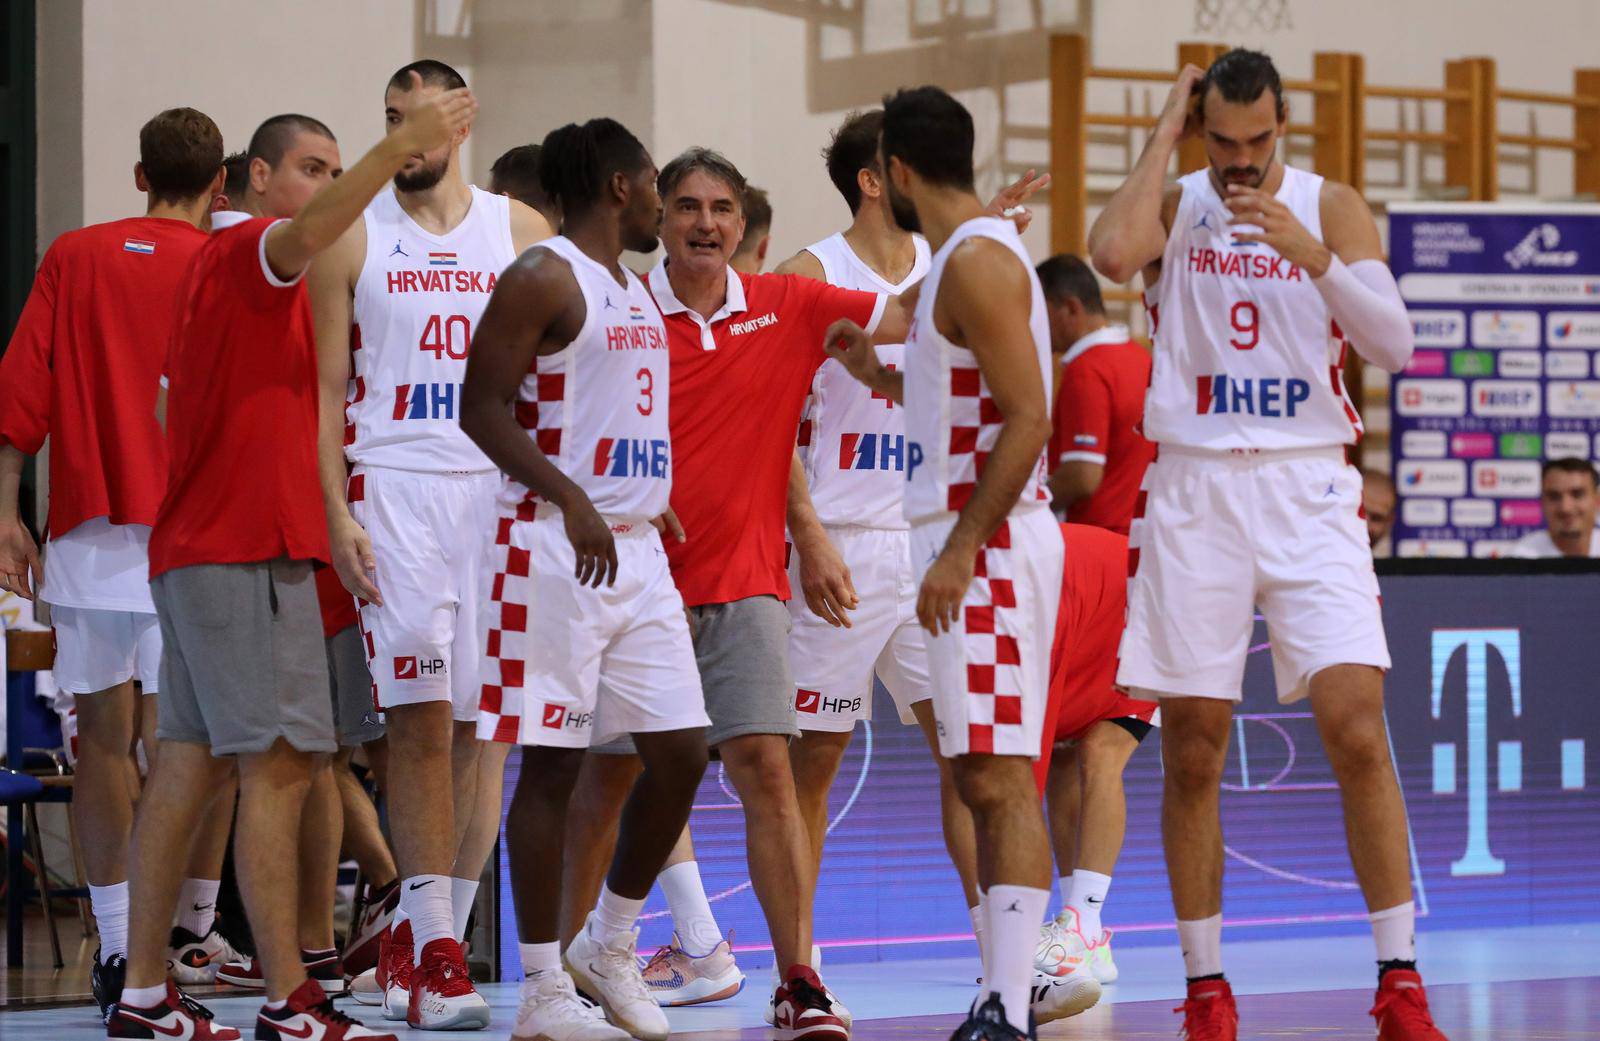 Opatija: Prijateljska košarkaška utakmica, Hrvatska - Mađarska